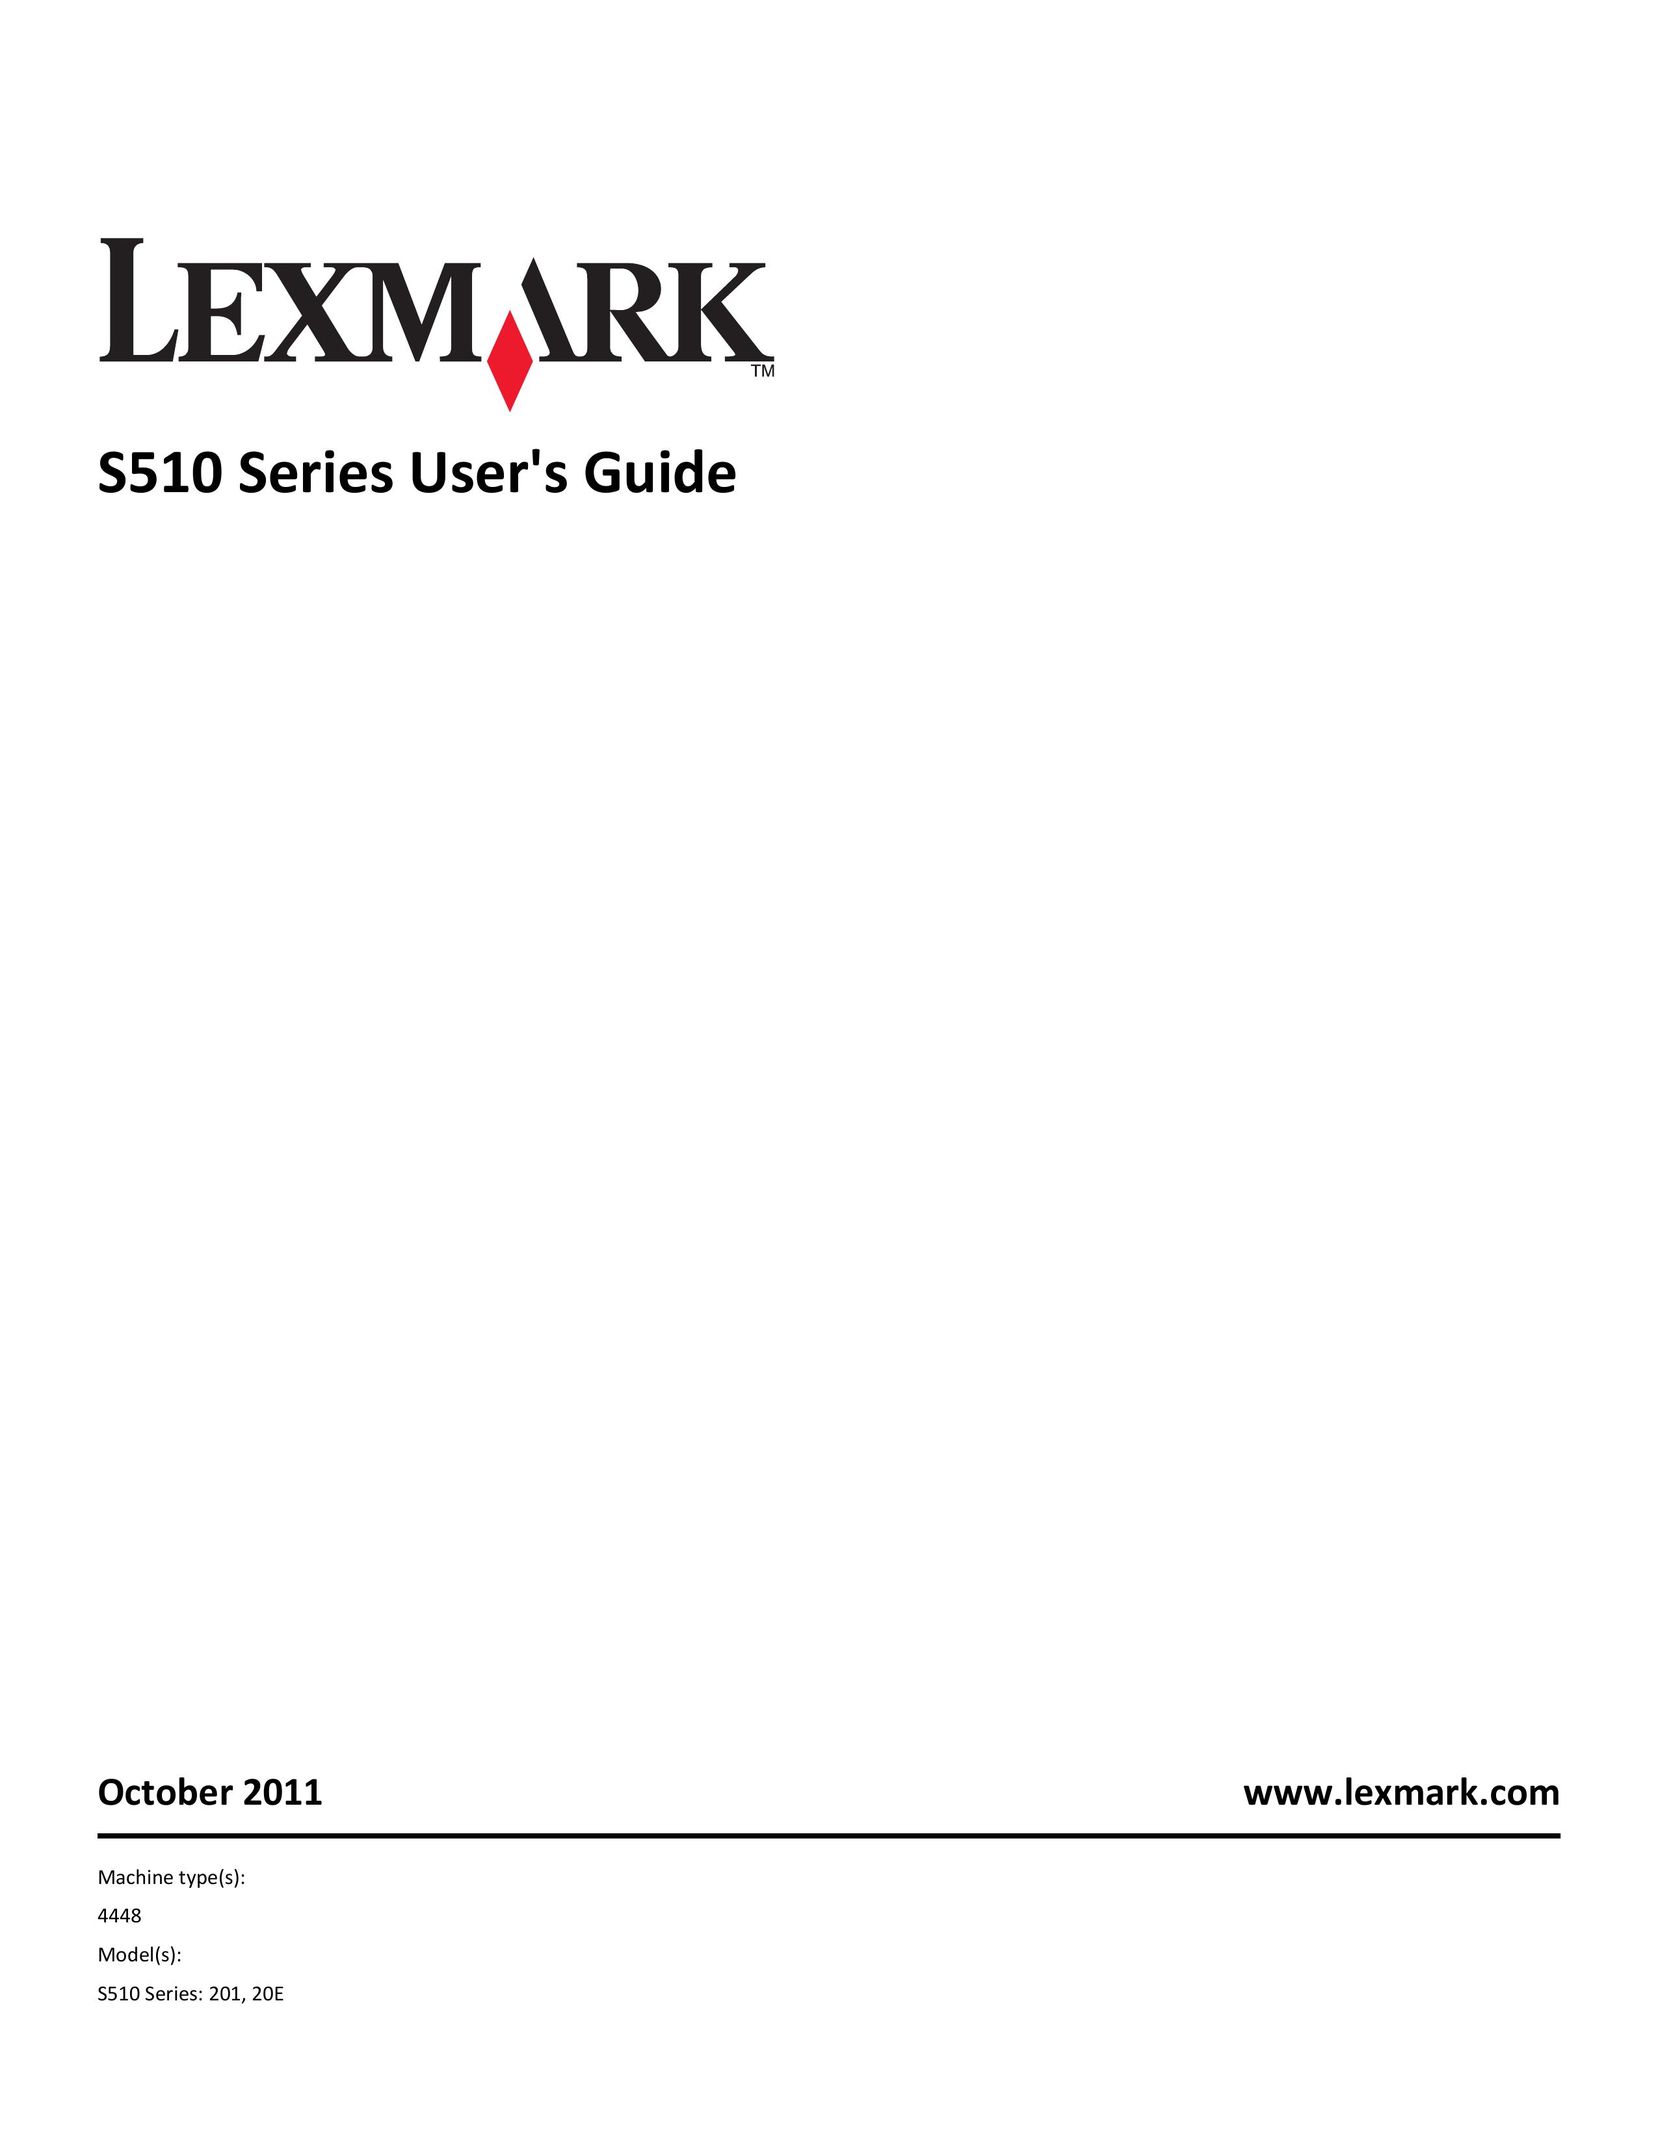 Lexmark 201 All in One Printer User Manual